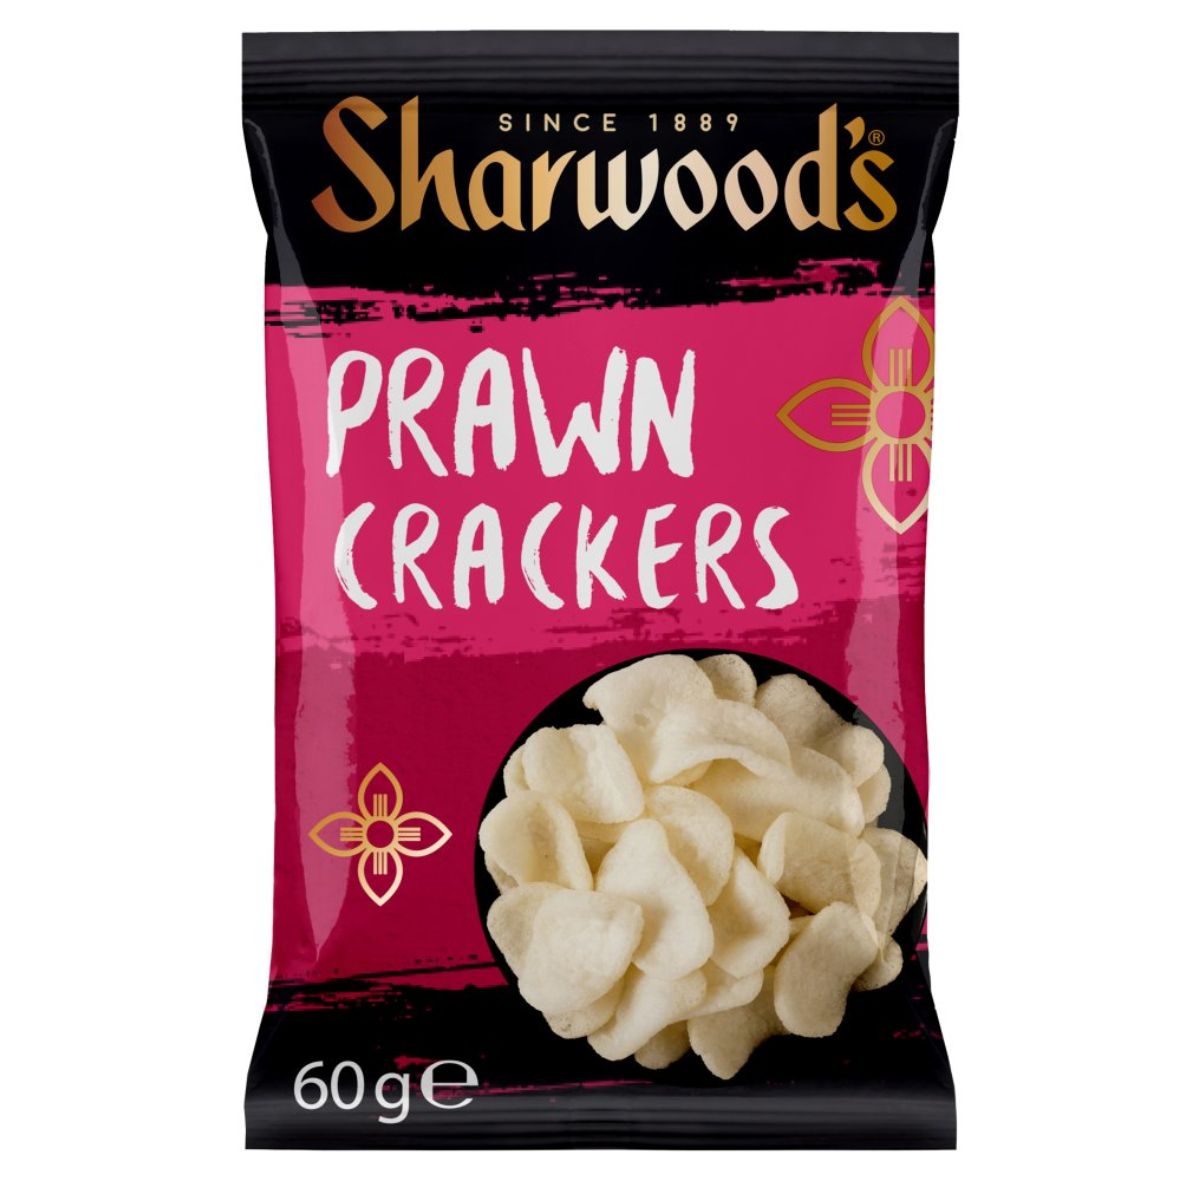 Sharwoods - Prawn Crackers - 60g on a white background.